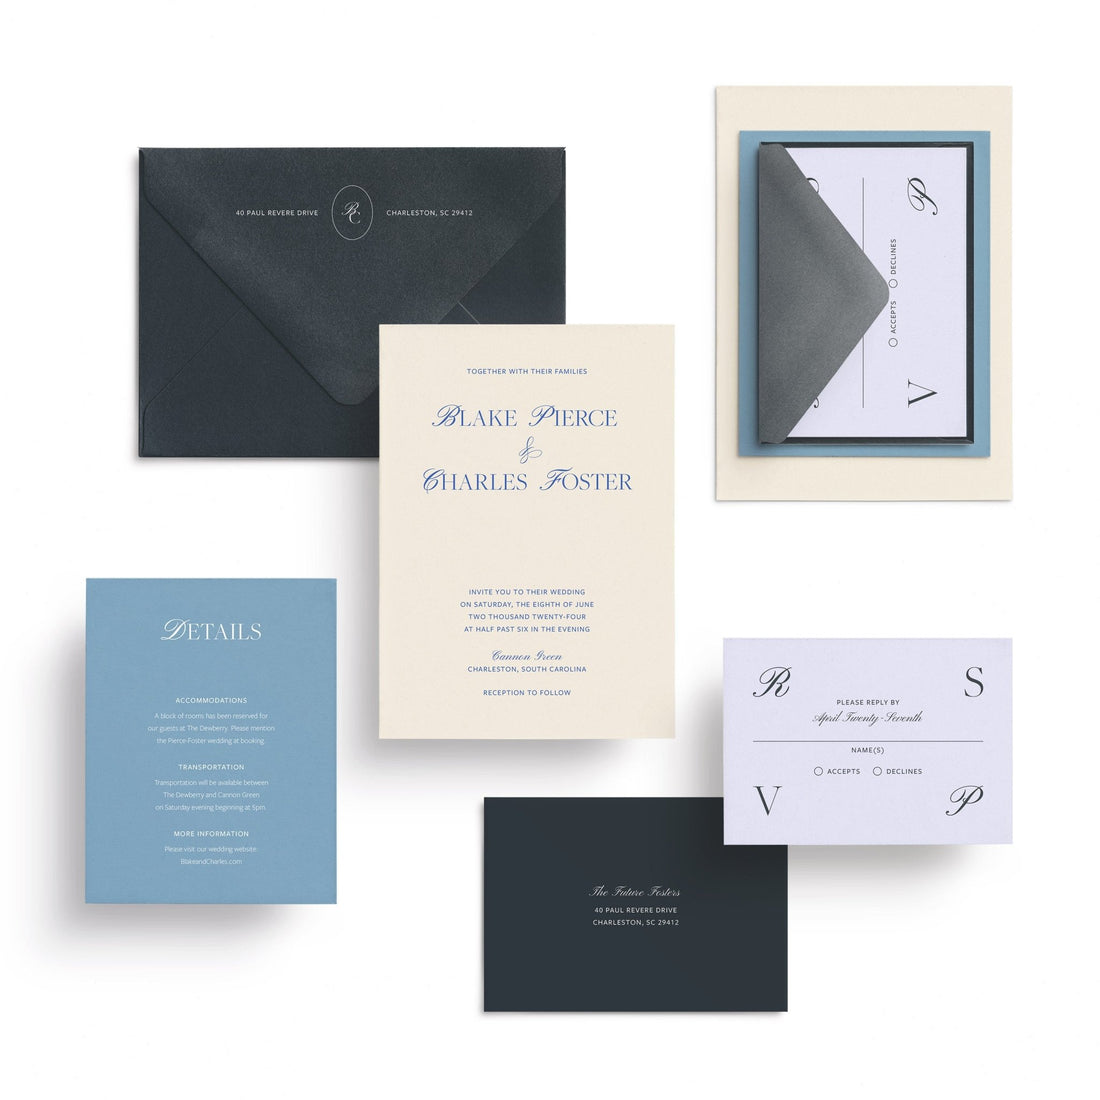 Customizable wedding invitation suite inspired by Charleston, South Carolina.